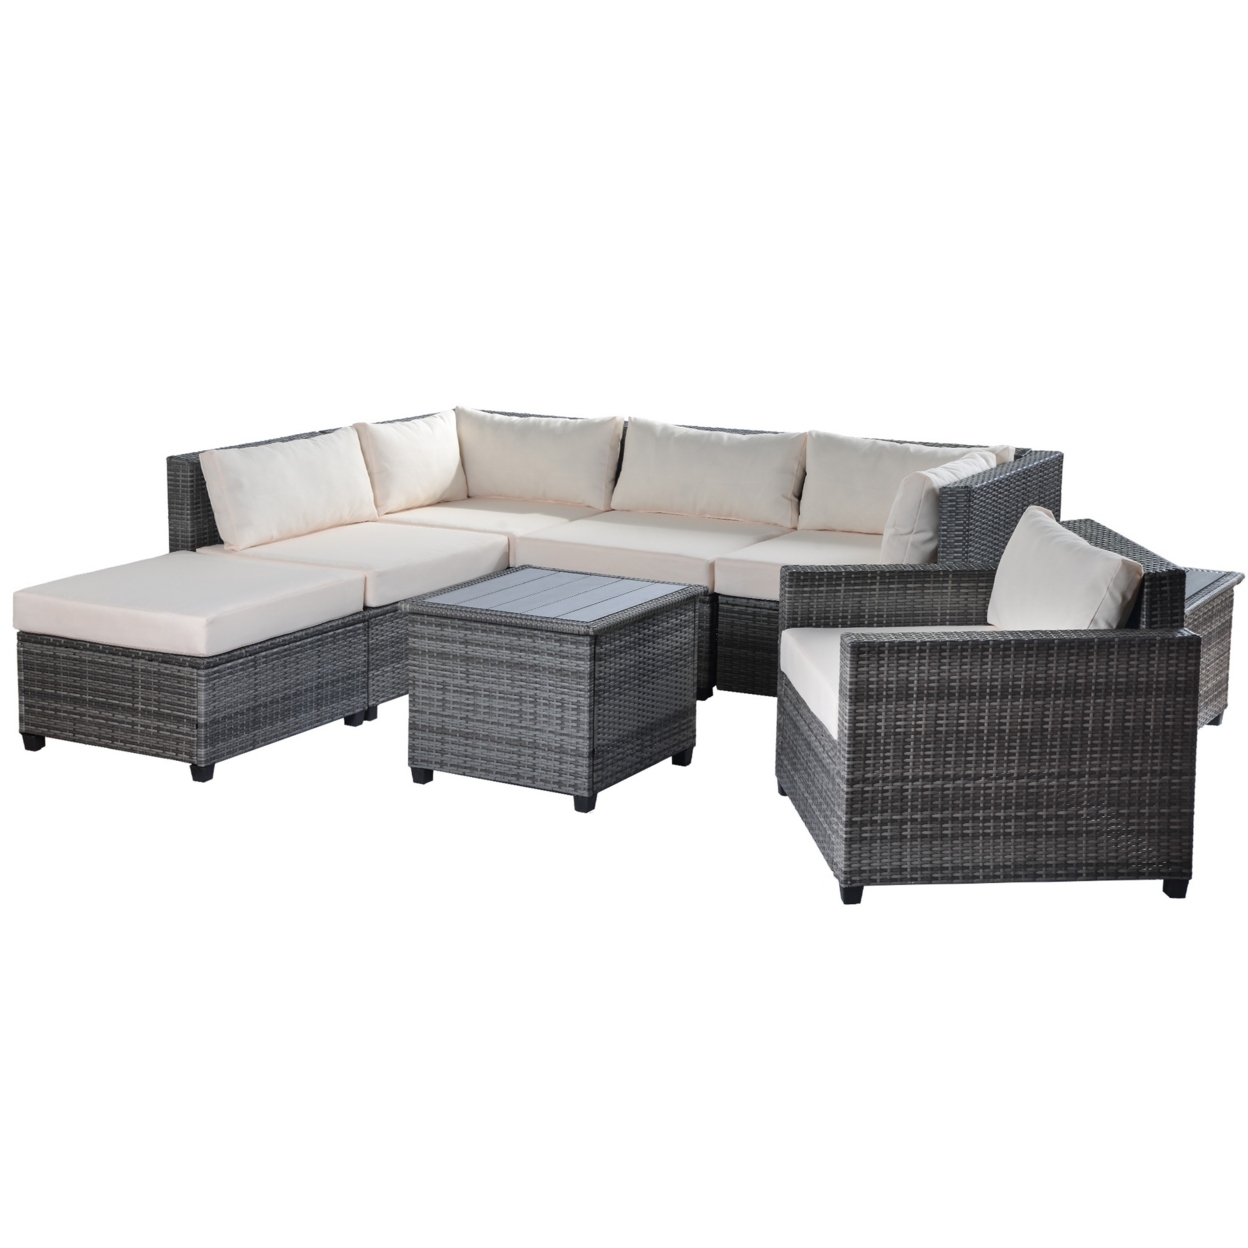 8 Piece Modern Outdoor Sectional Sofa Set, Steel And Rattan Frame, Gray- Saltoro Sherpi